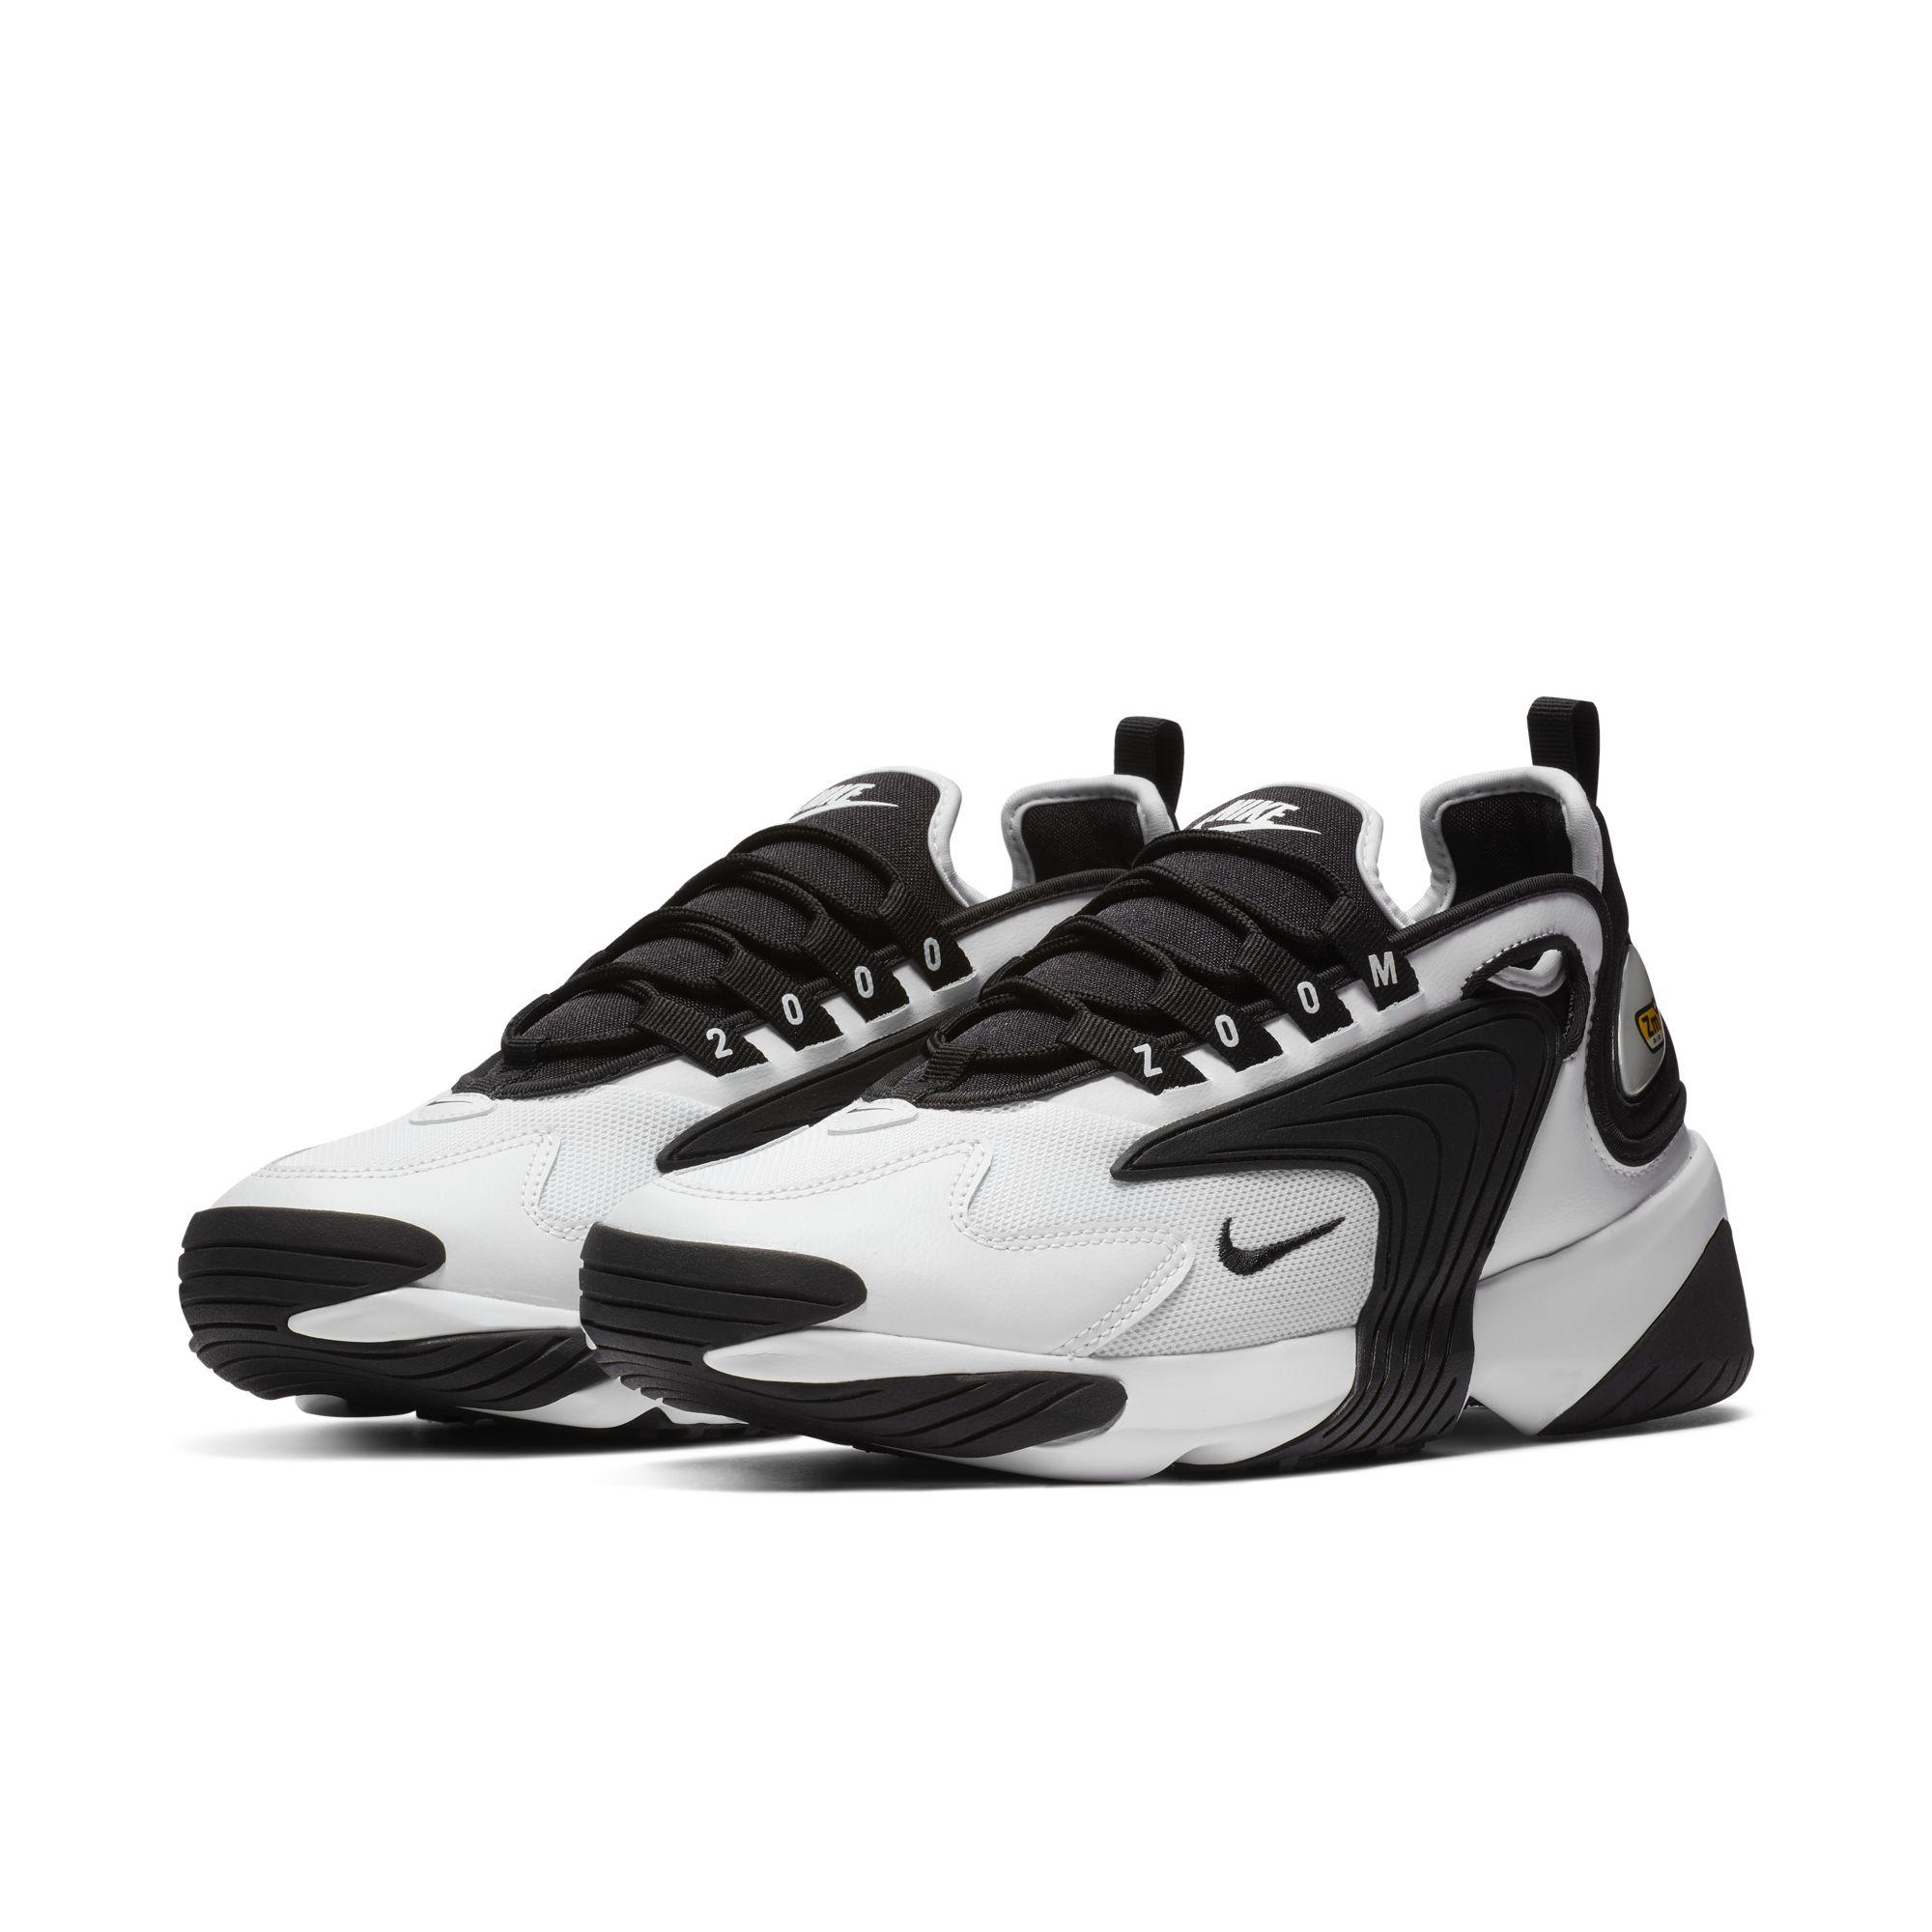 Nike Rubber Zoom 2k Running Shoes in White/Grey (White) | Lyst Australia